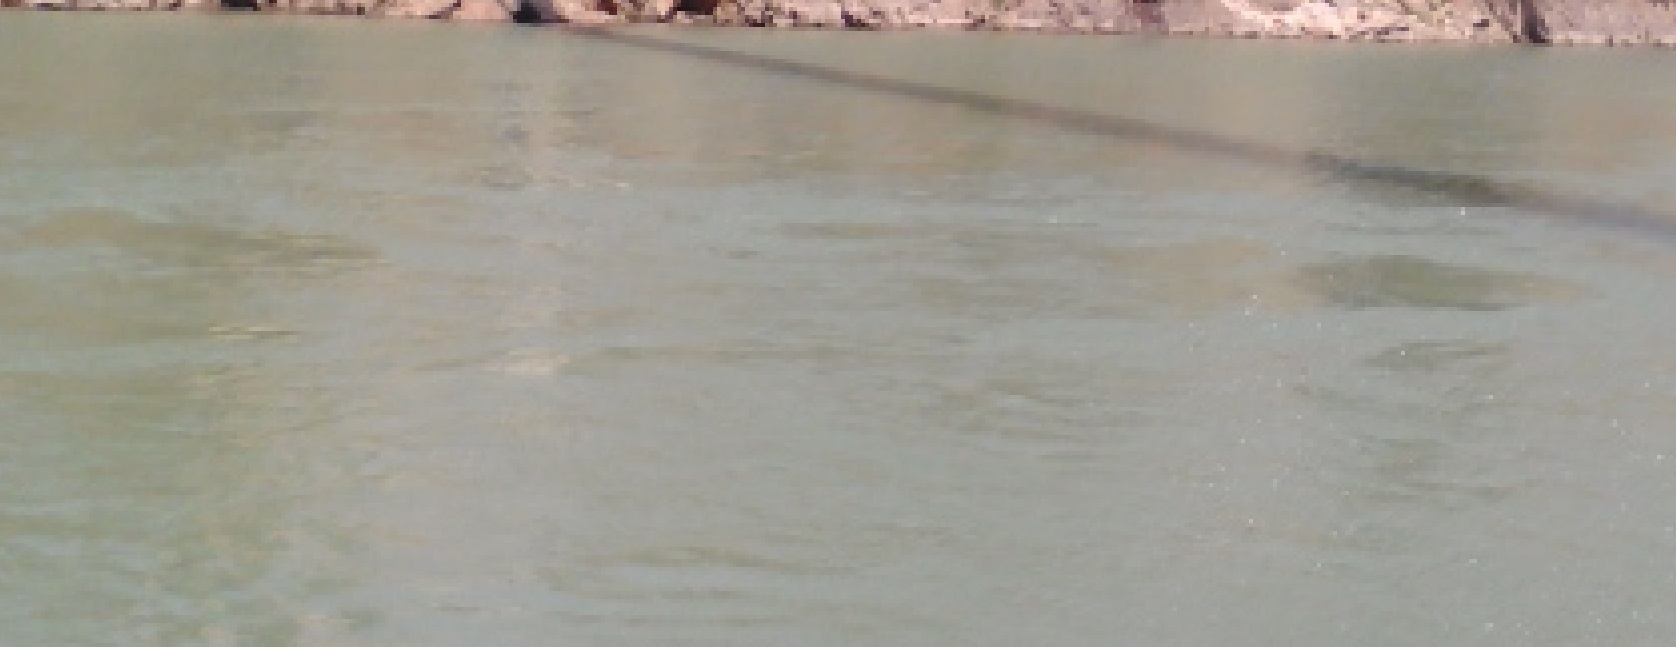 Lake Pichola, Udaipur Tour, Rajasthan